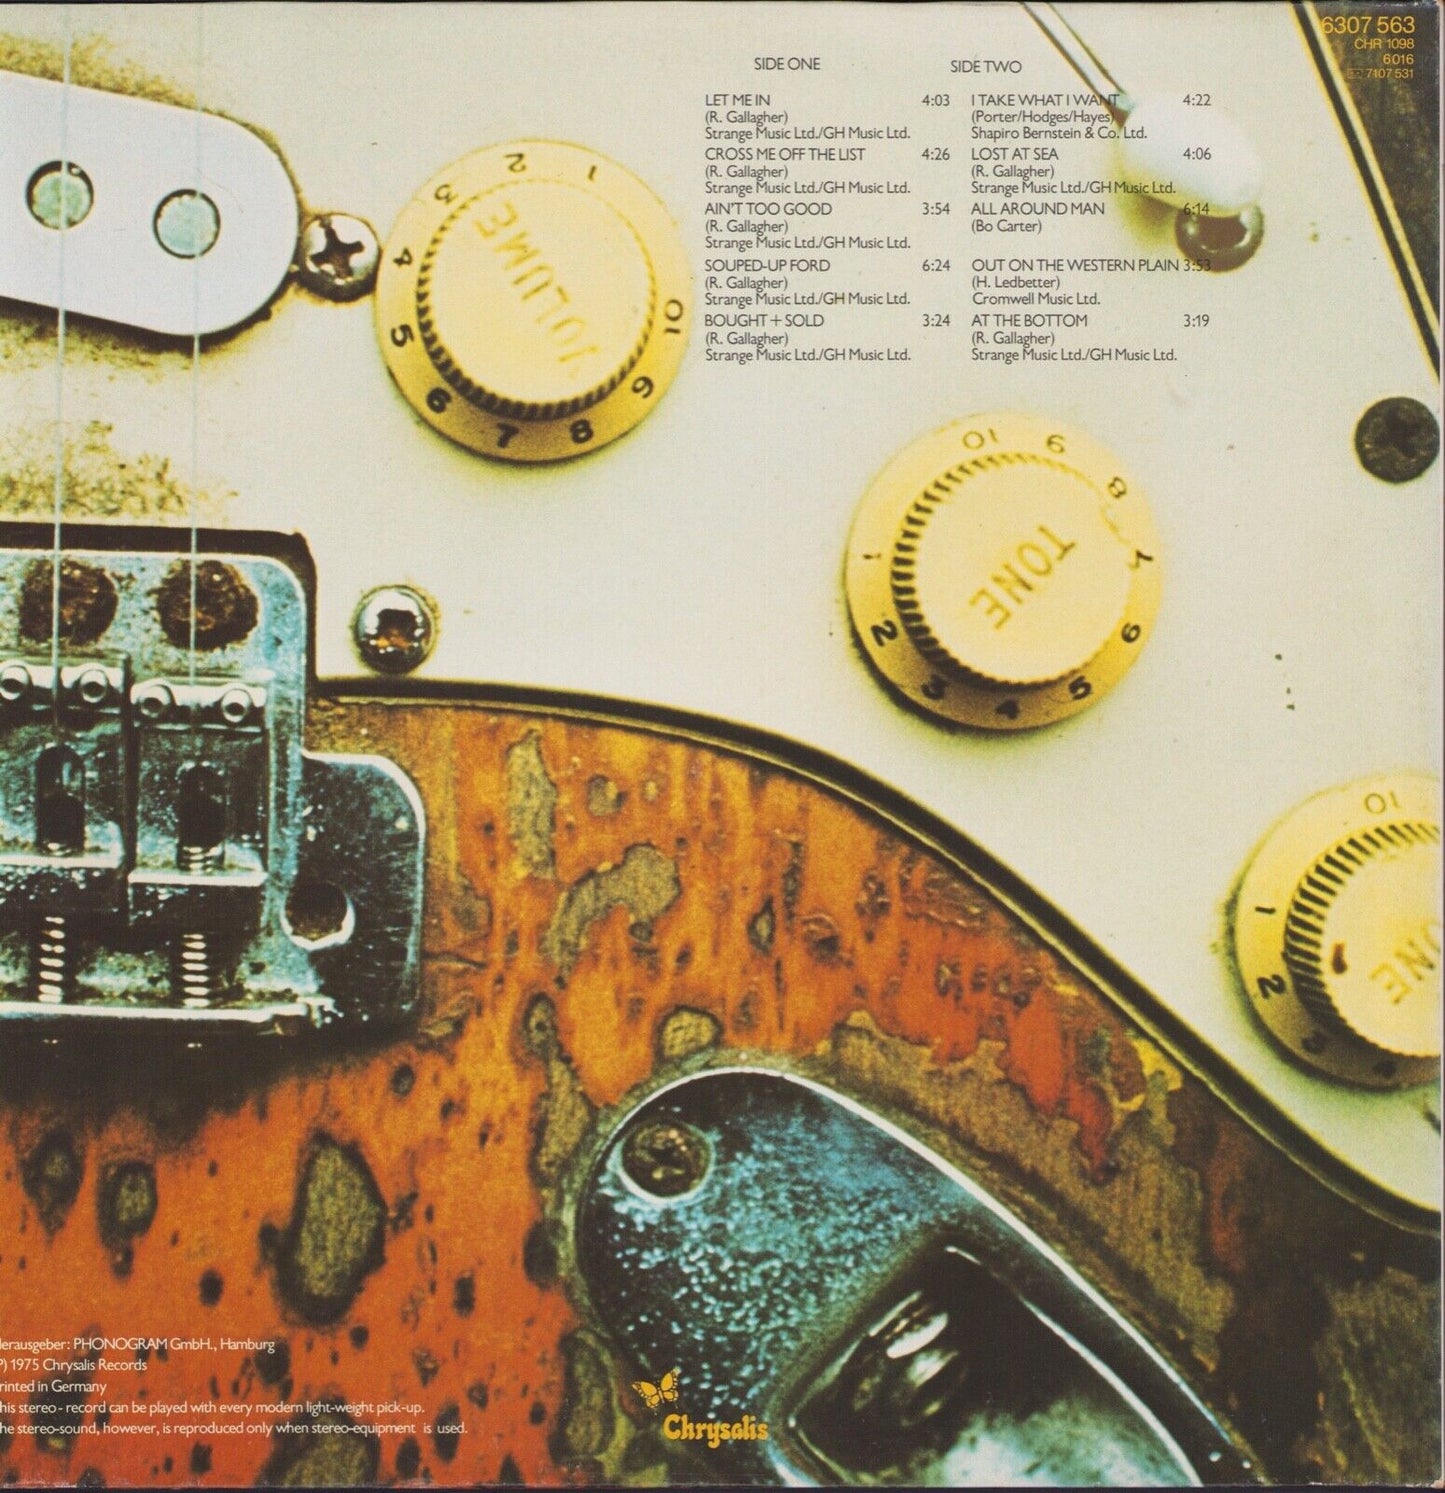 Rory Gallagher ‎- Against The Grain Vinyl LP